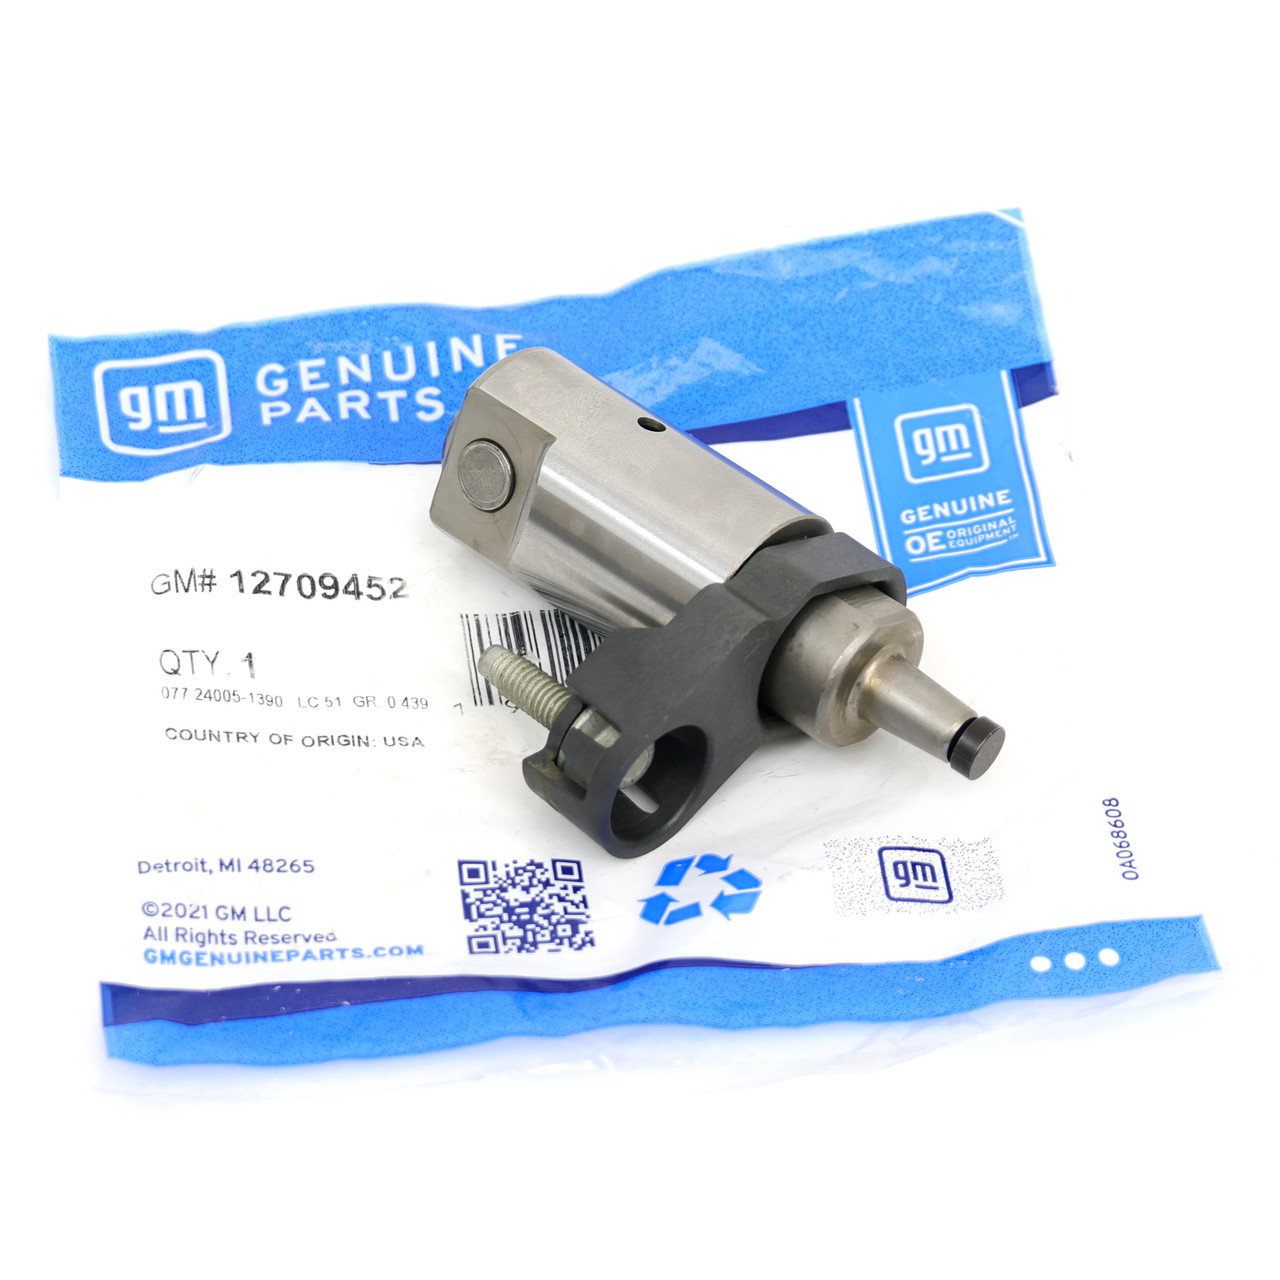 GM 12709452 Fuel Pump Follower Lifter for 2019+ L84 L87 LT2 Gen V LT Engines 